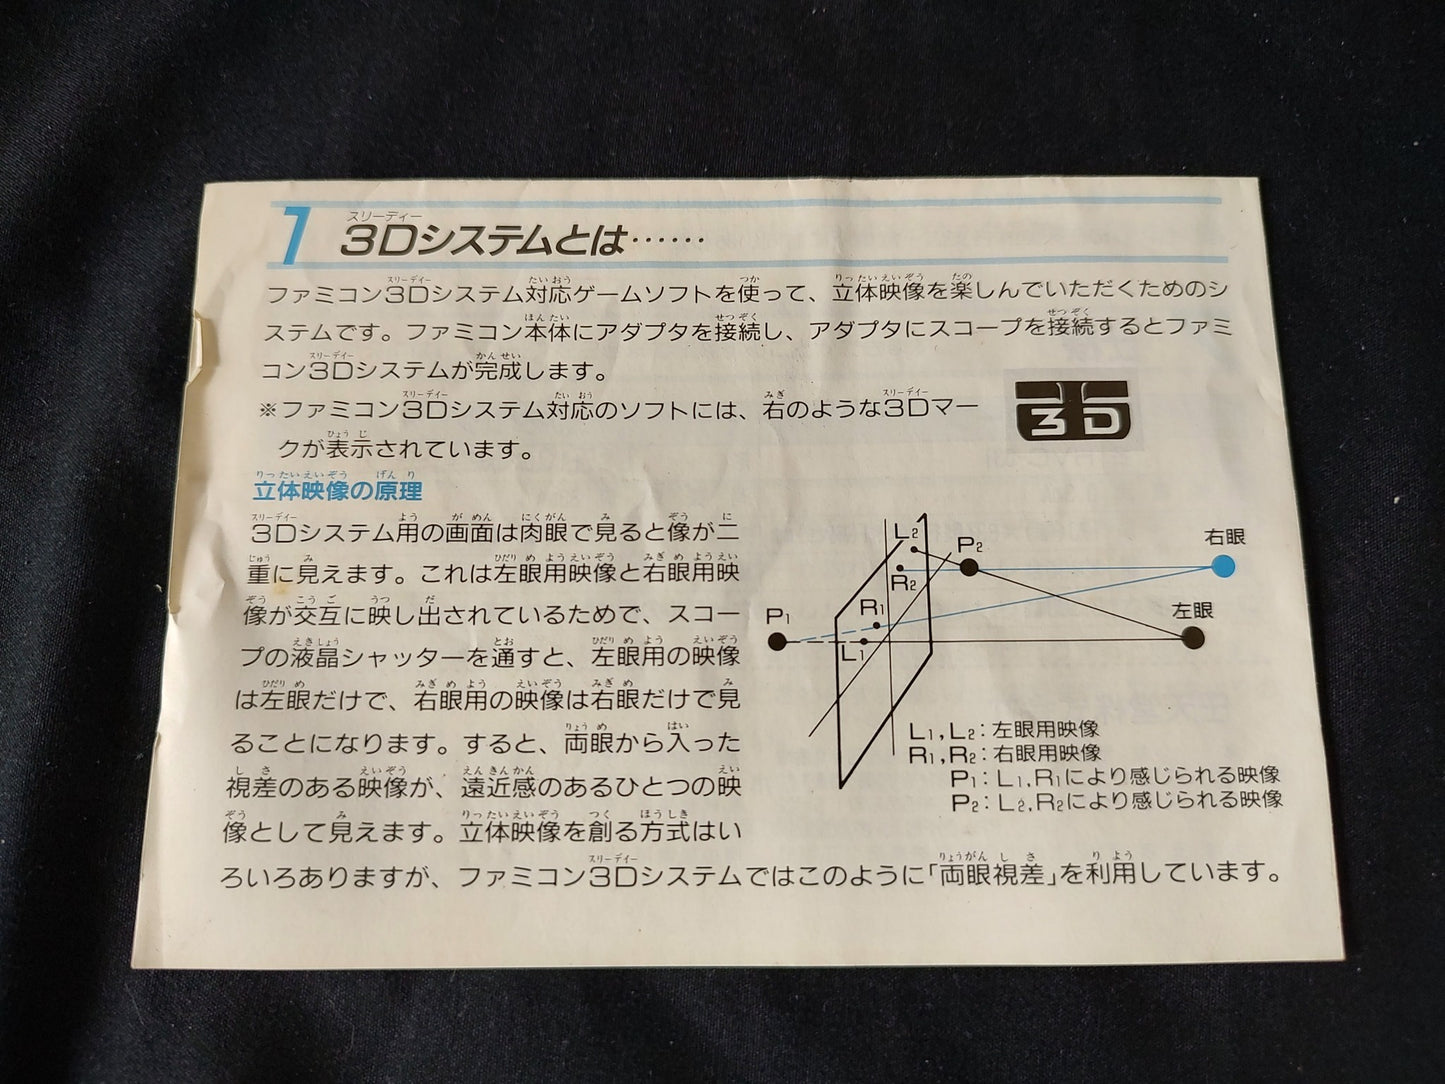 Nintendo 3D SYSTEM Scope HVC-3DS Famicom NES,Manual,Boxed set-f0518-